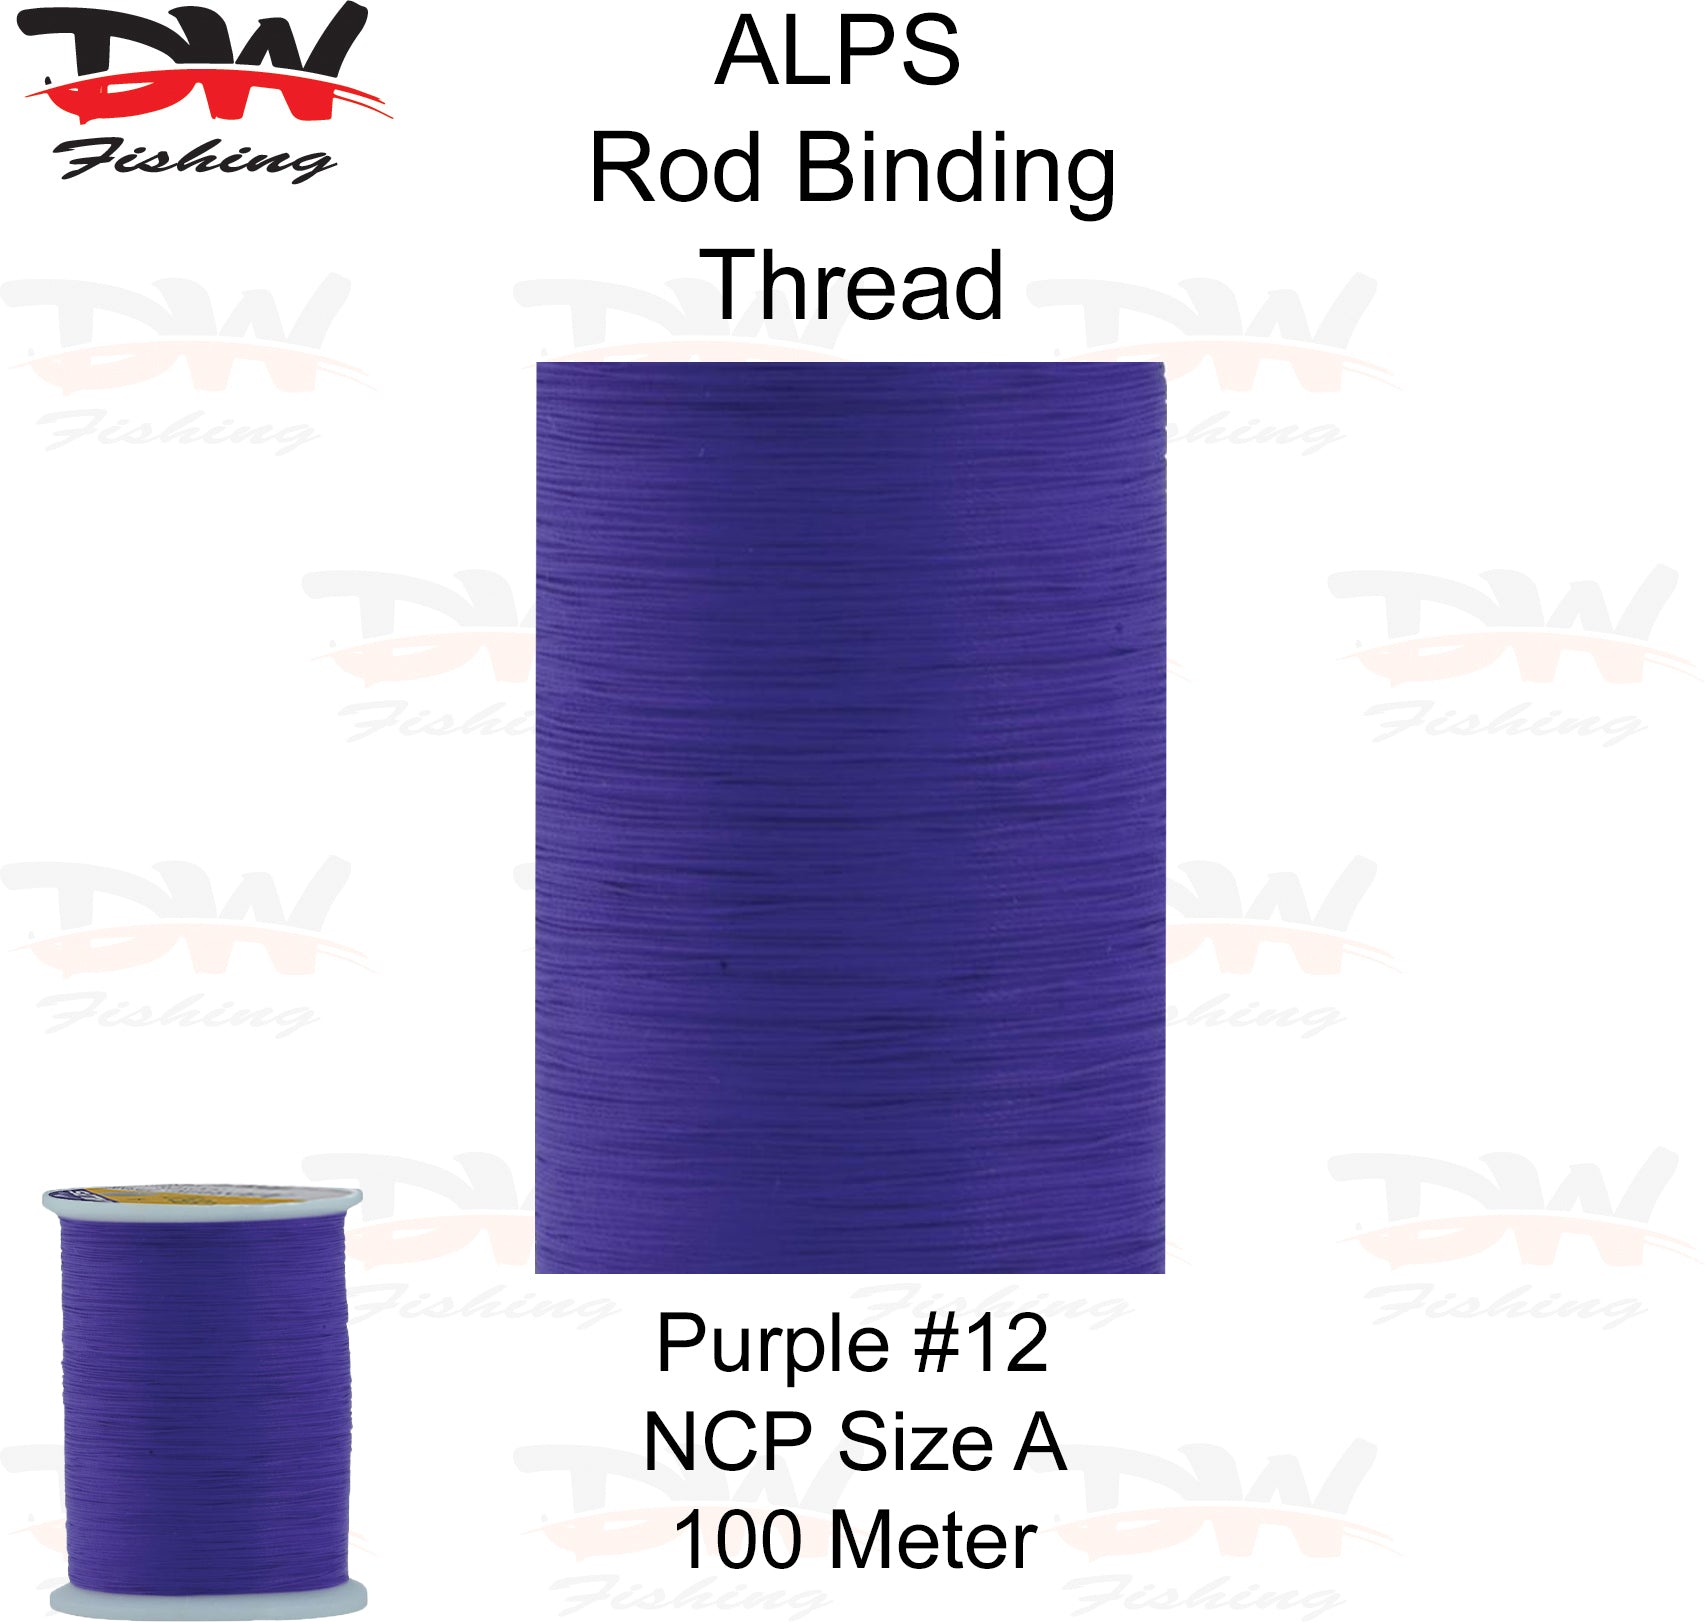 ALPS nylon rod binding thread purple